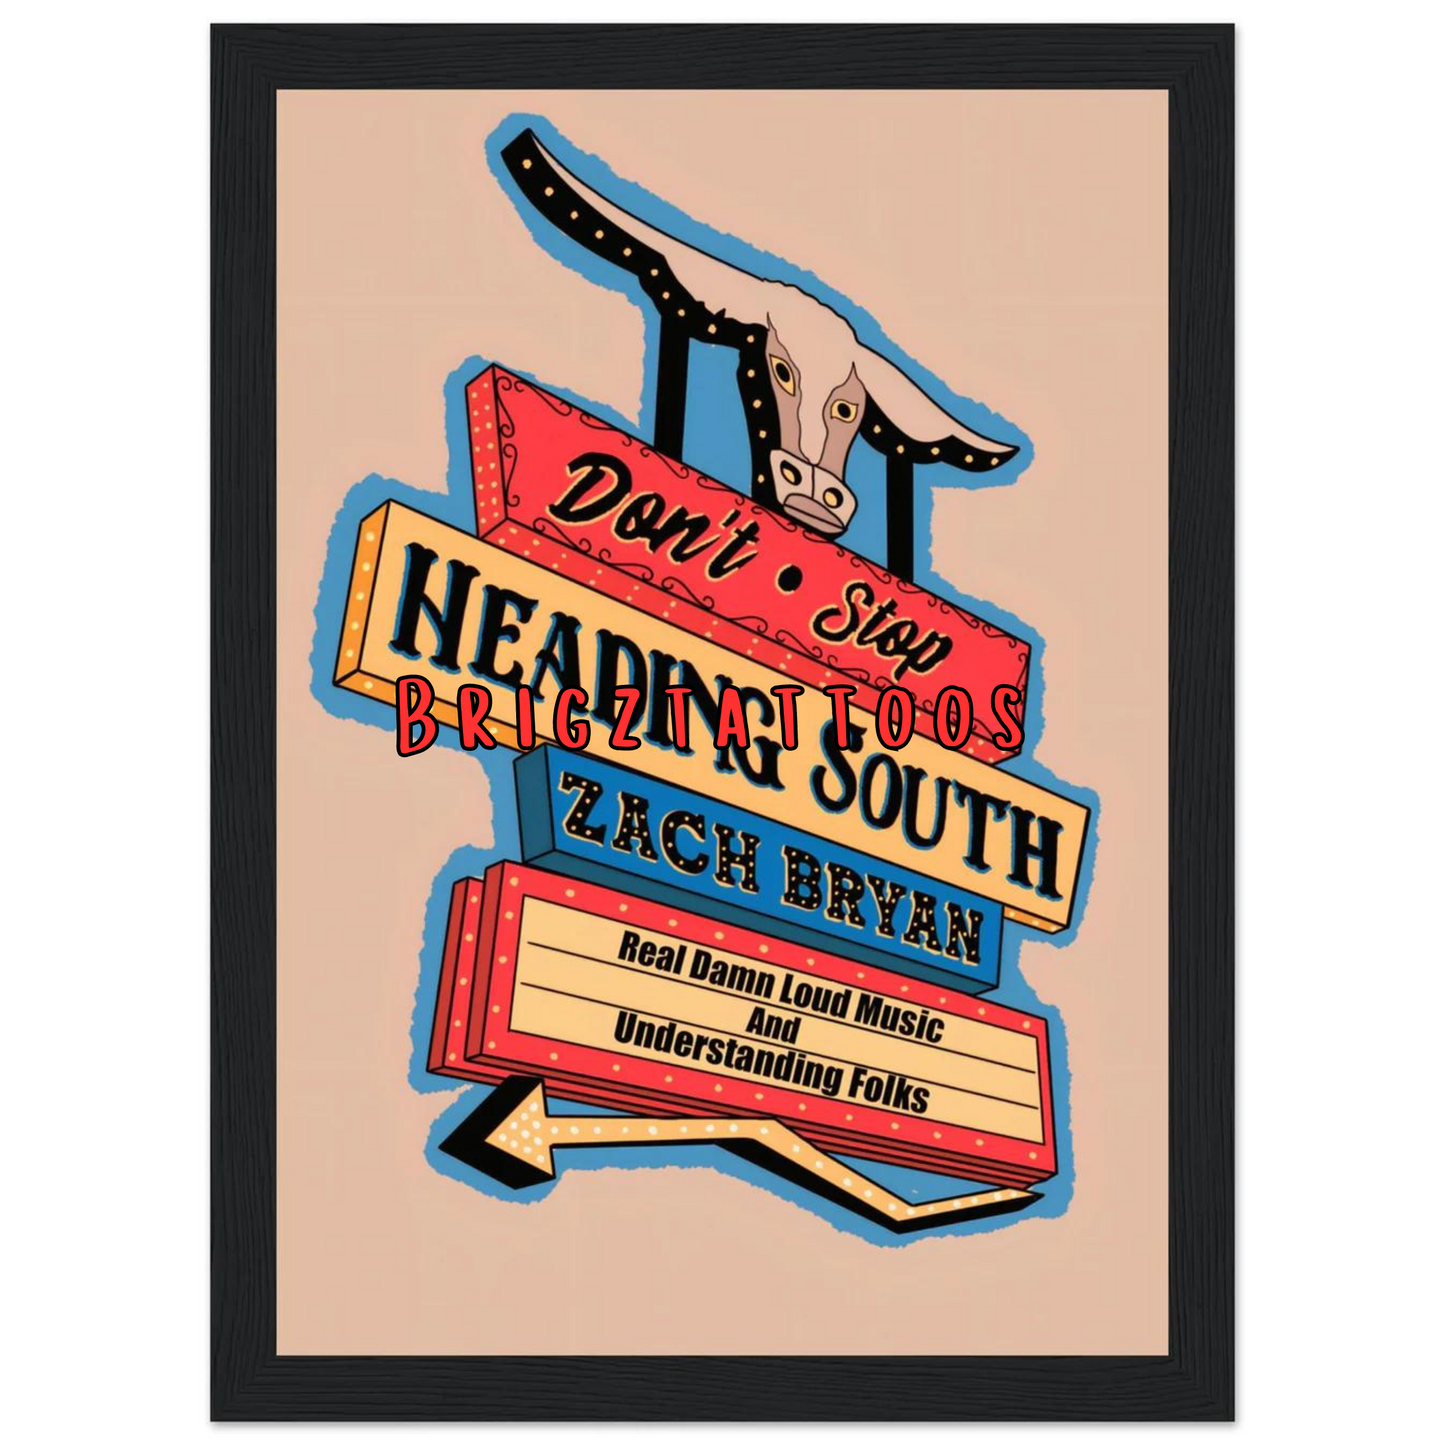 Zach Bryan Inspired Heading South Graphic Print